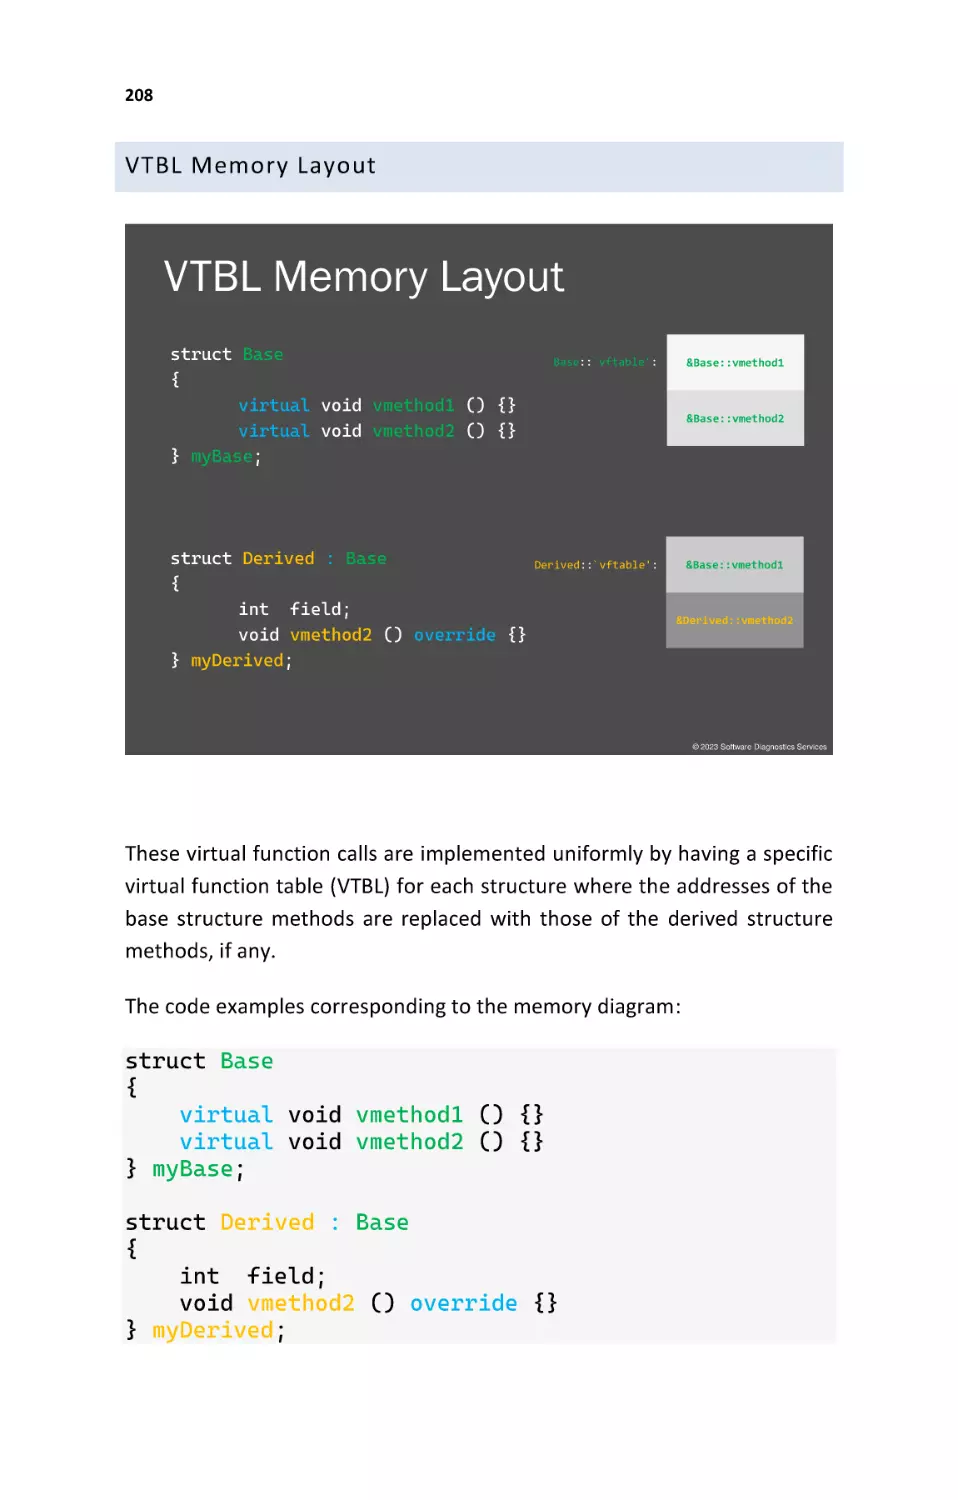 VTBL Memory Layout